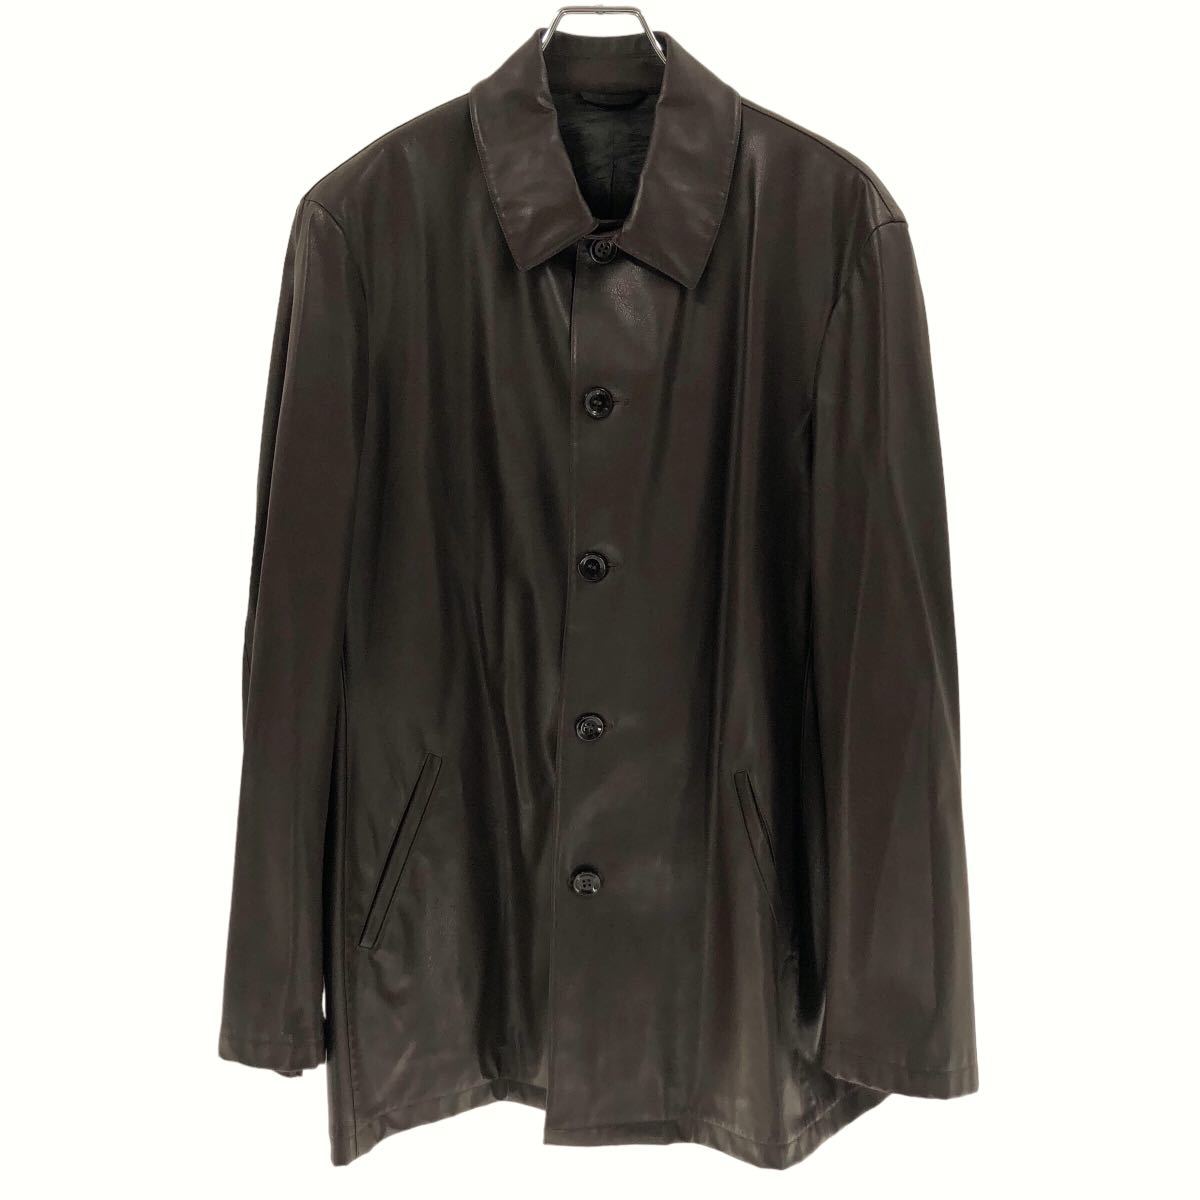  прекрасный товар Armani koretso-niARMANI COLLEZIONI кожаный жакет кожа пальто Brown 52 размер XL размер большой размер 